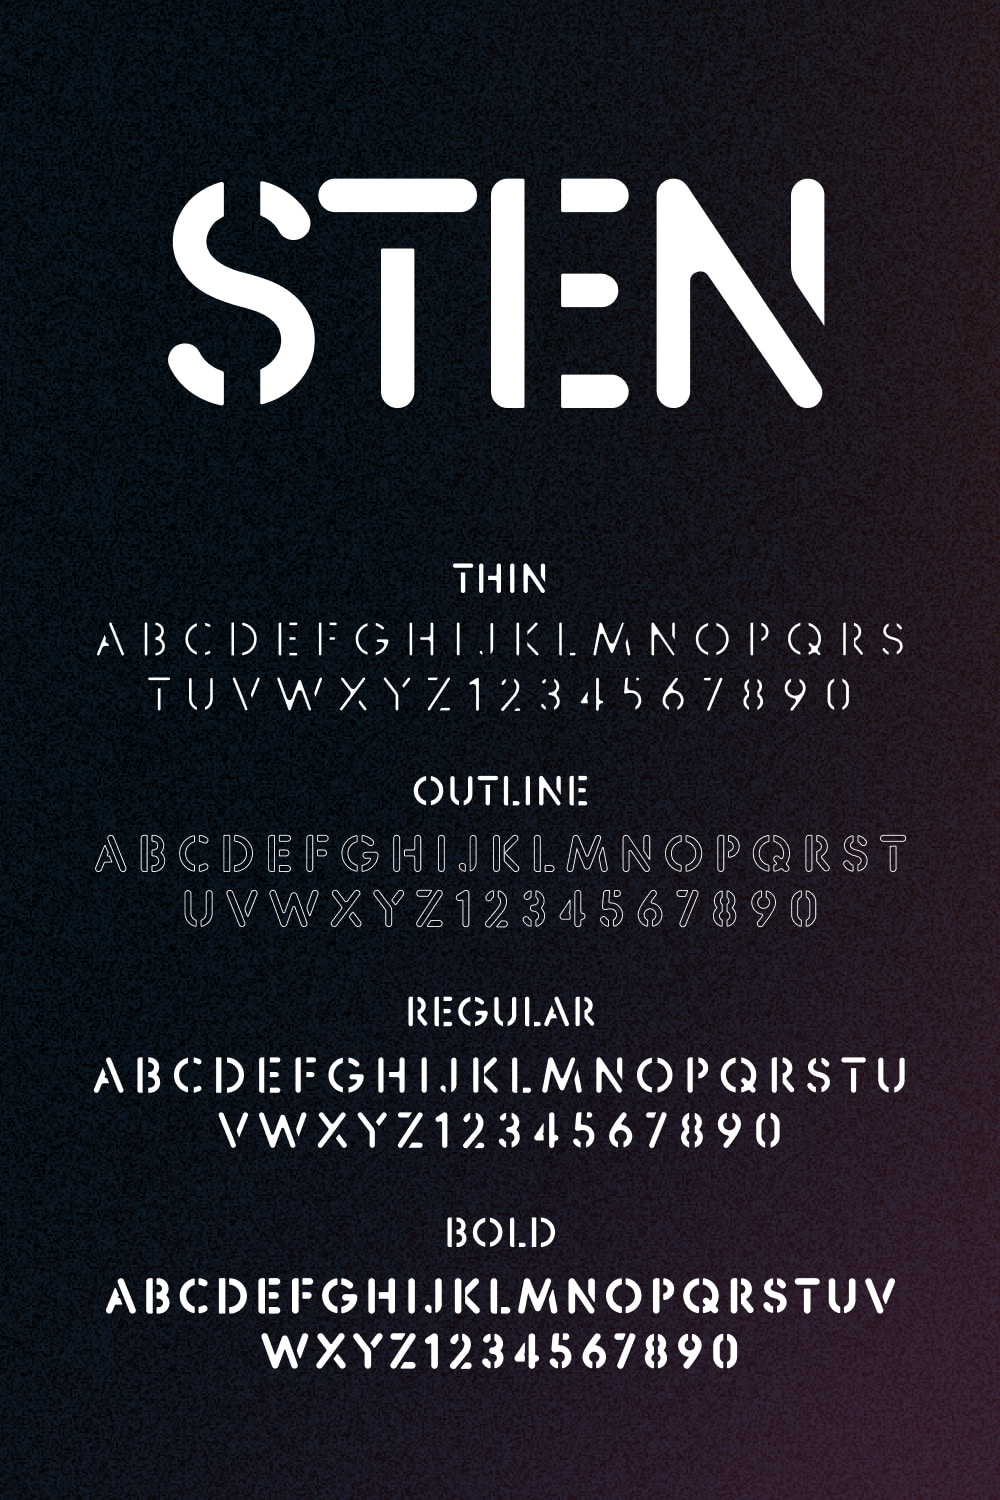 Sten font of pinterest.